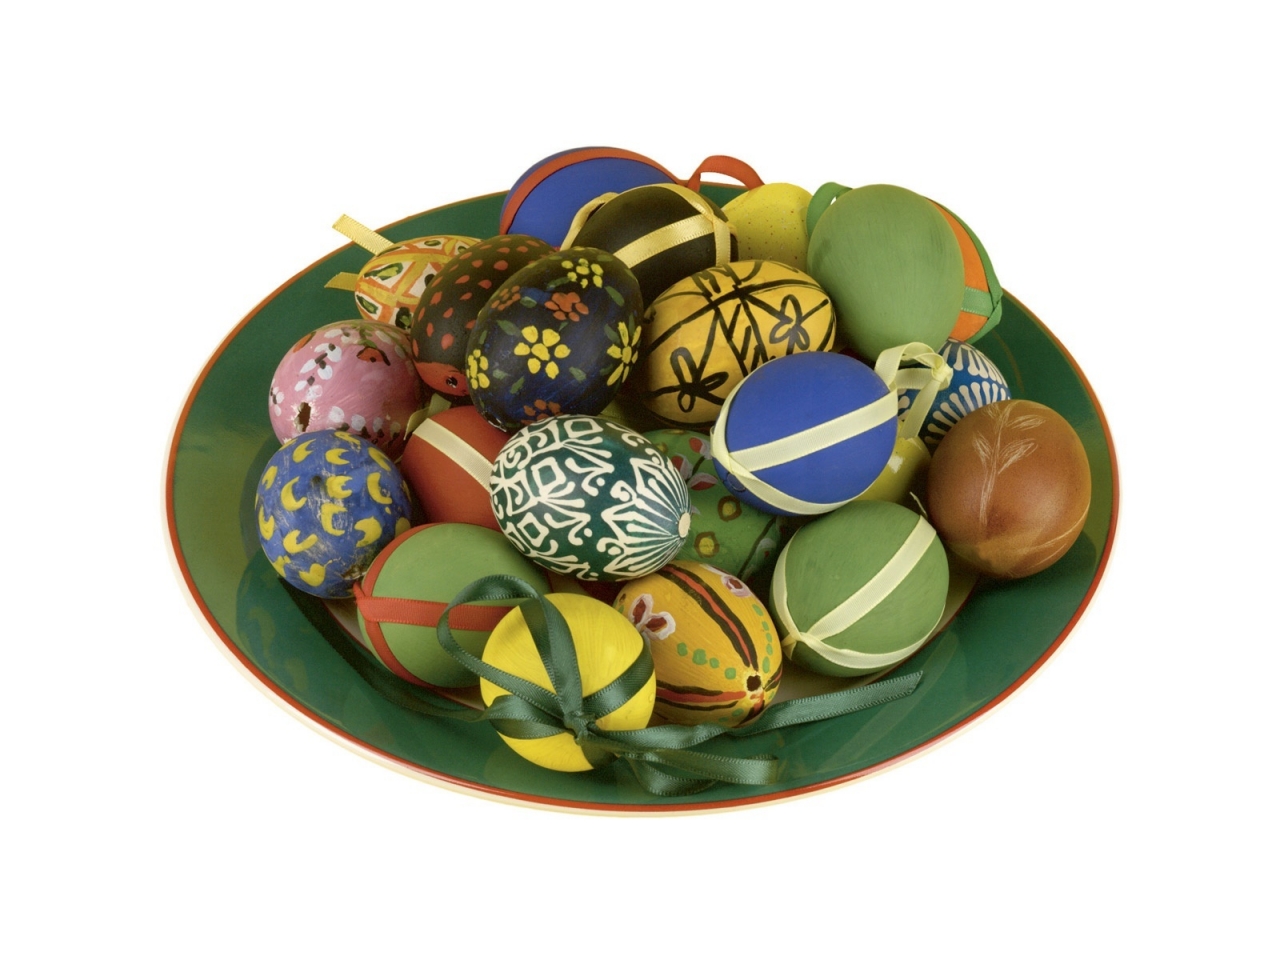 Enjoy Easter Eggs for 1280 x 960 resolution